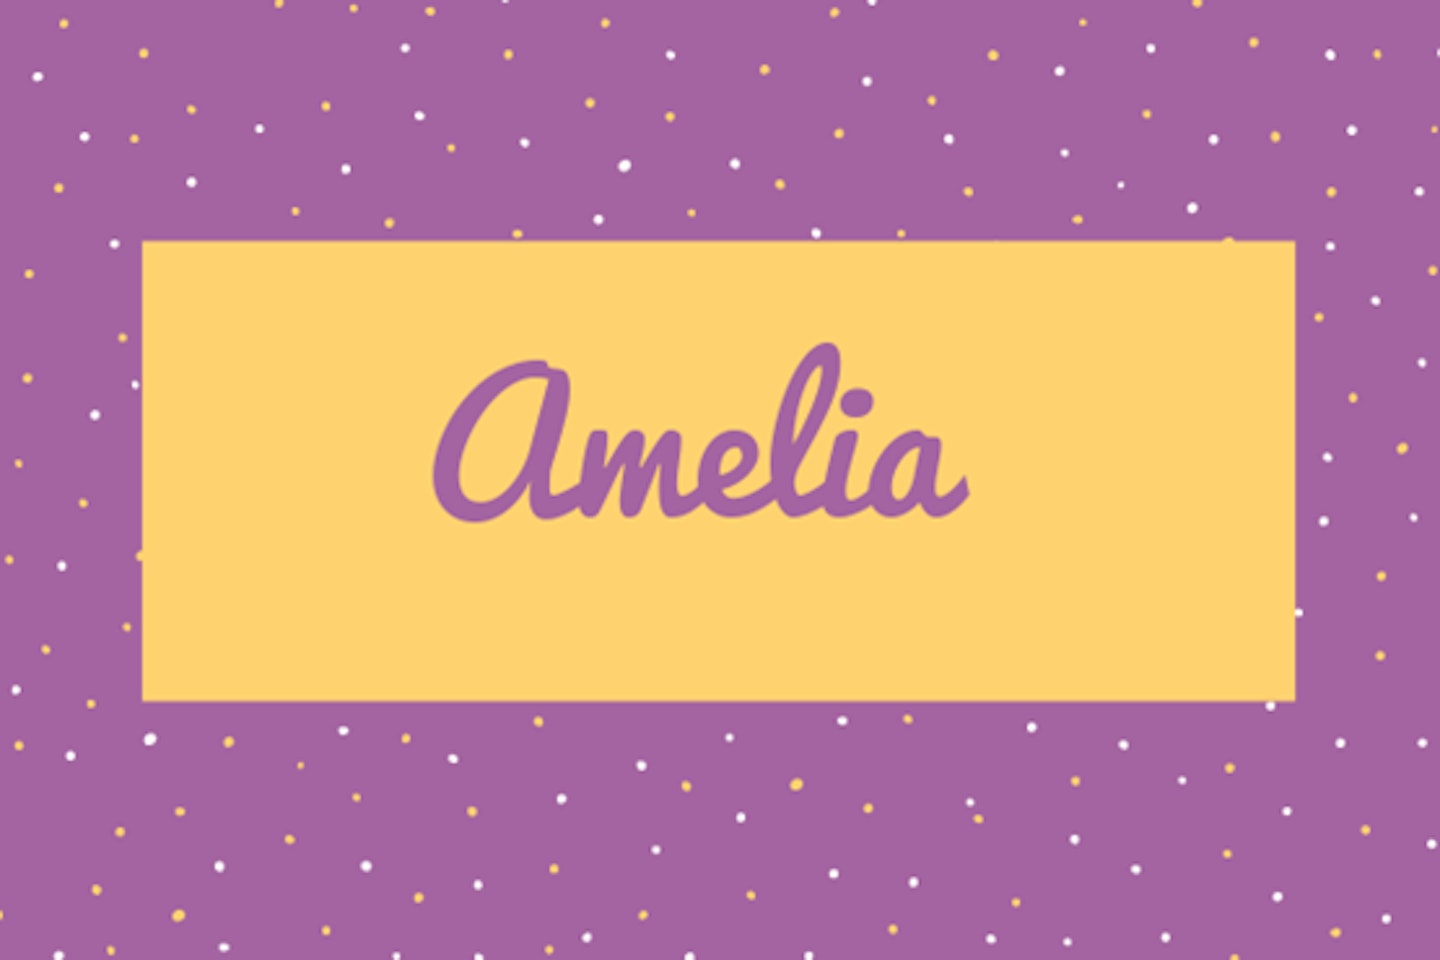 17) Amelia